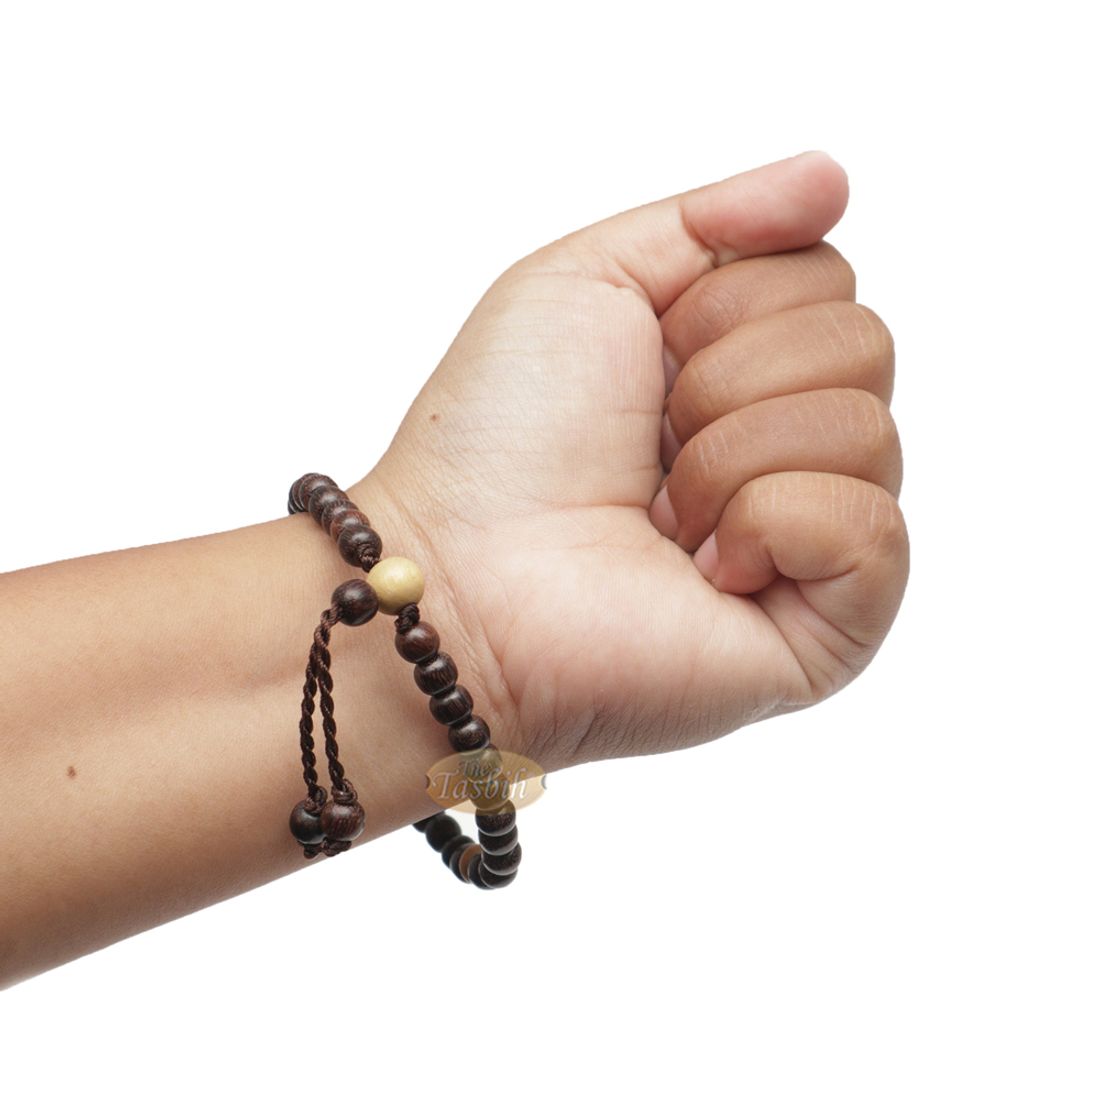 Small 6mm Tamarind Tasbih Bracelet with Citrus Wood 33ct Prayer Beads (7 to 8.5”)